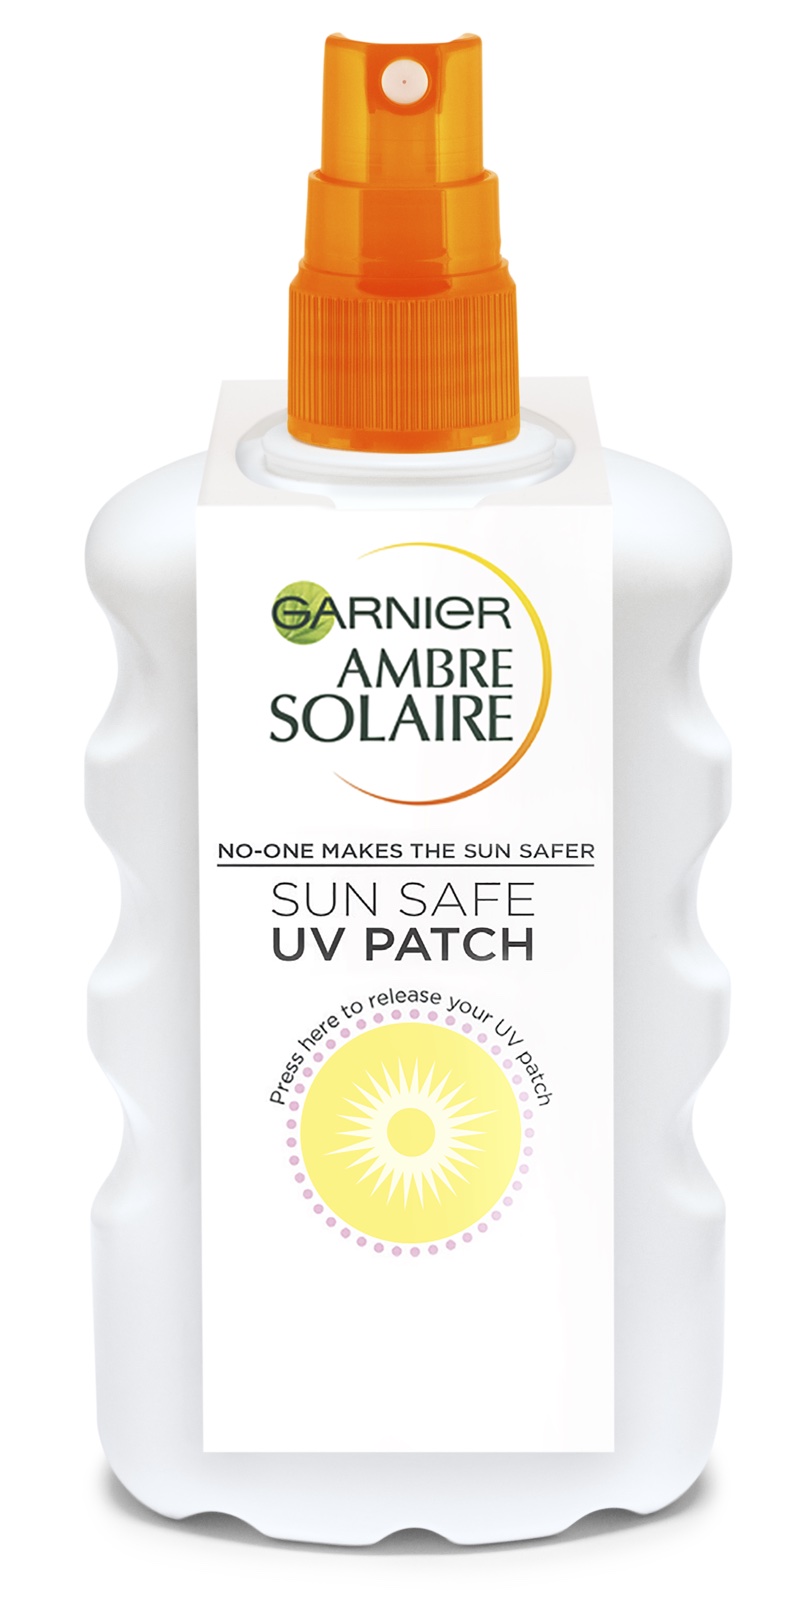 Garnier Ambre Solaire debuts new Sun Safe UV Patch with Tesco
